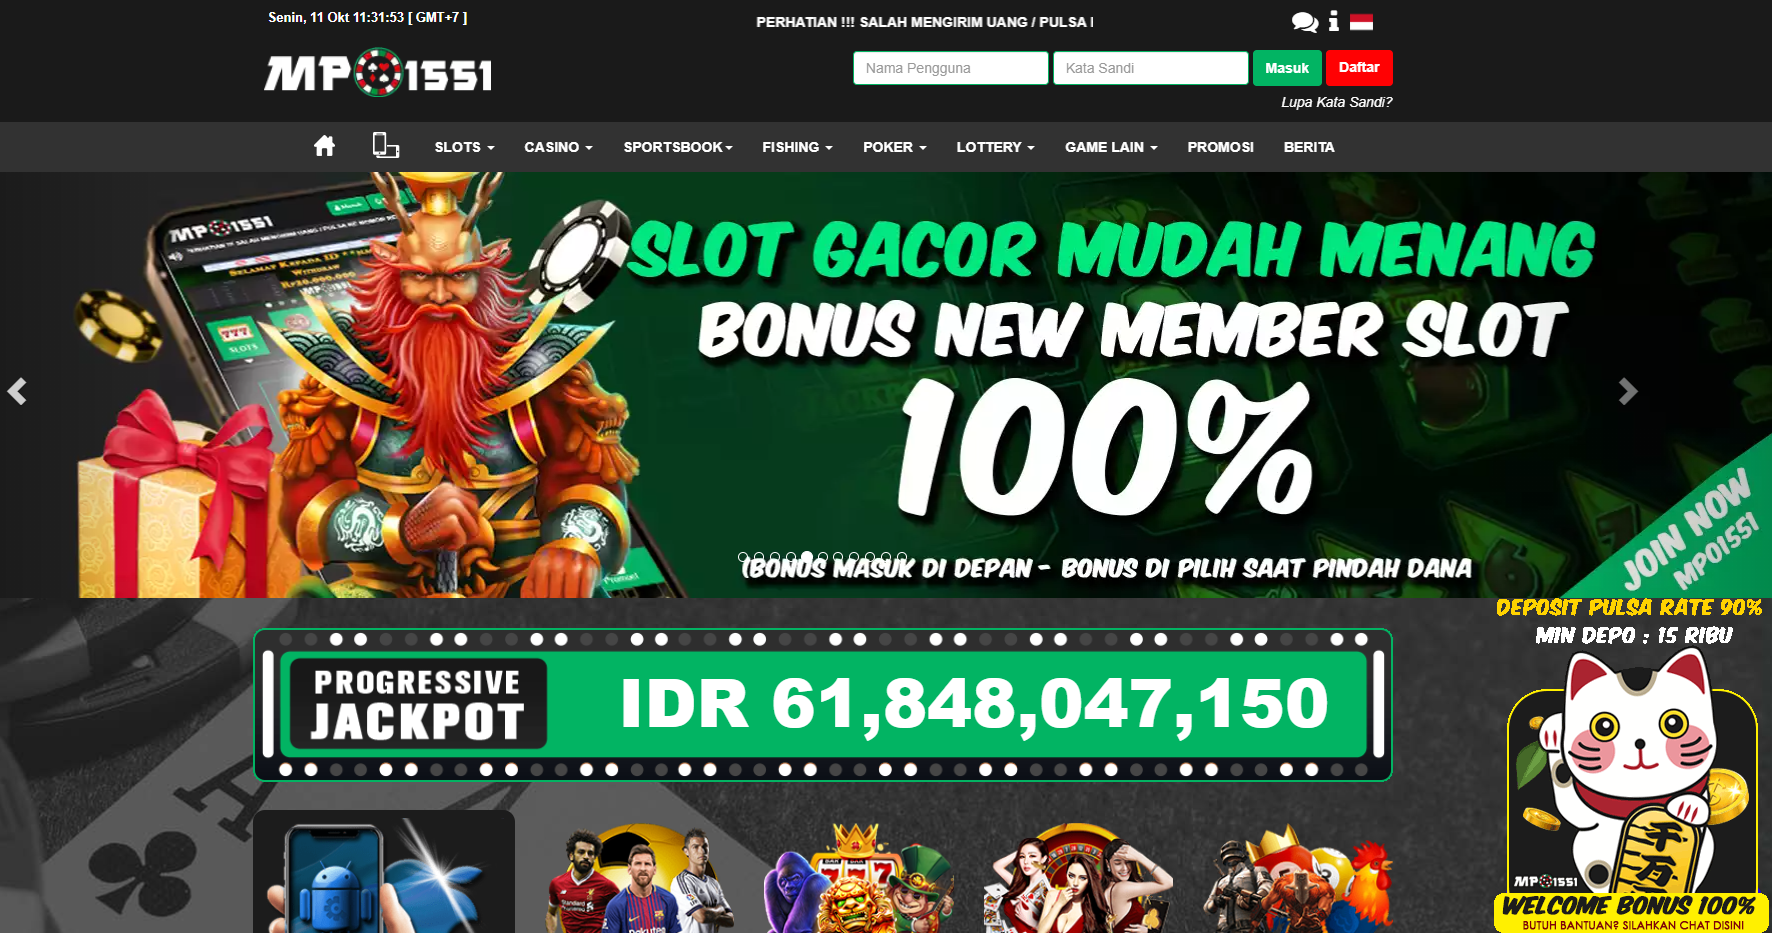 MPO1551 Situs Judi Slot Online Jakarta Deposit Dana Terpercaya